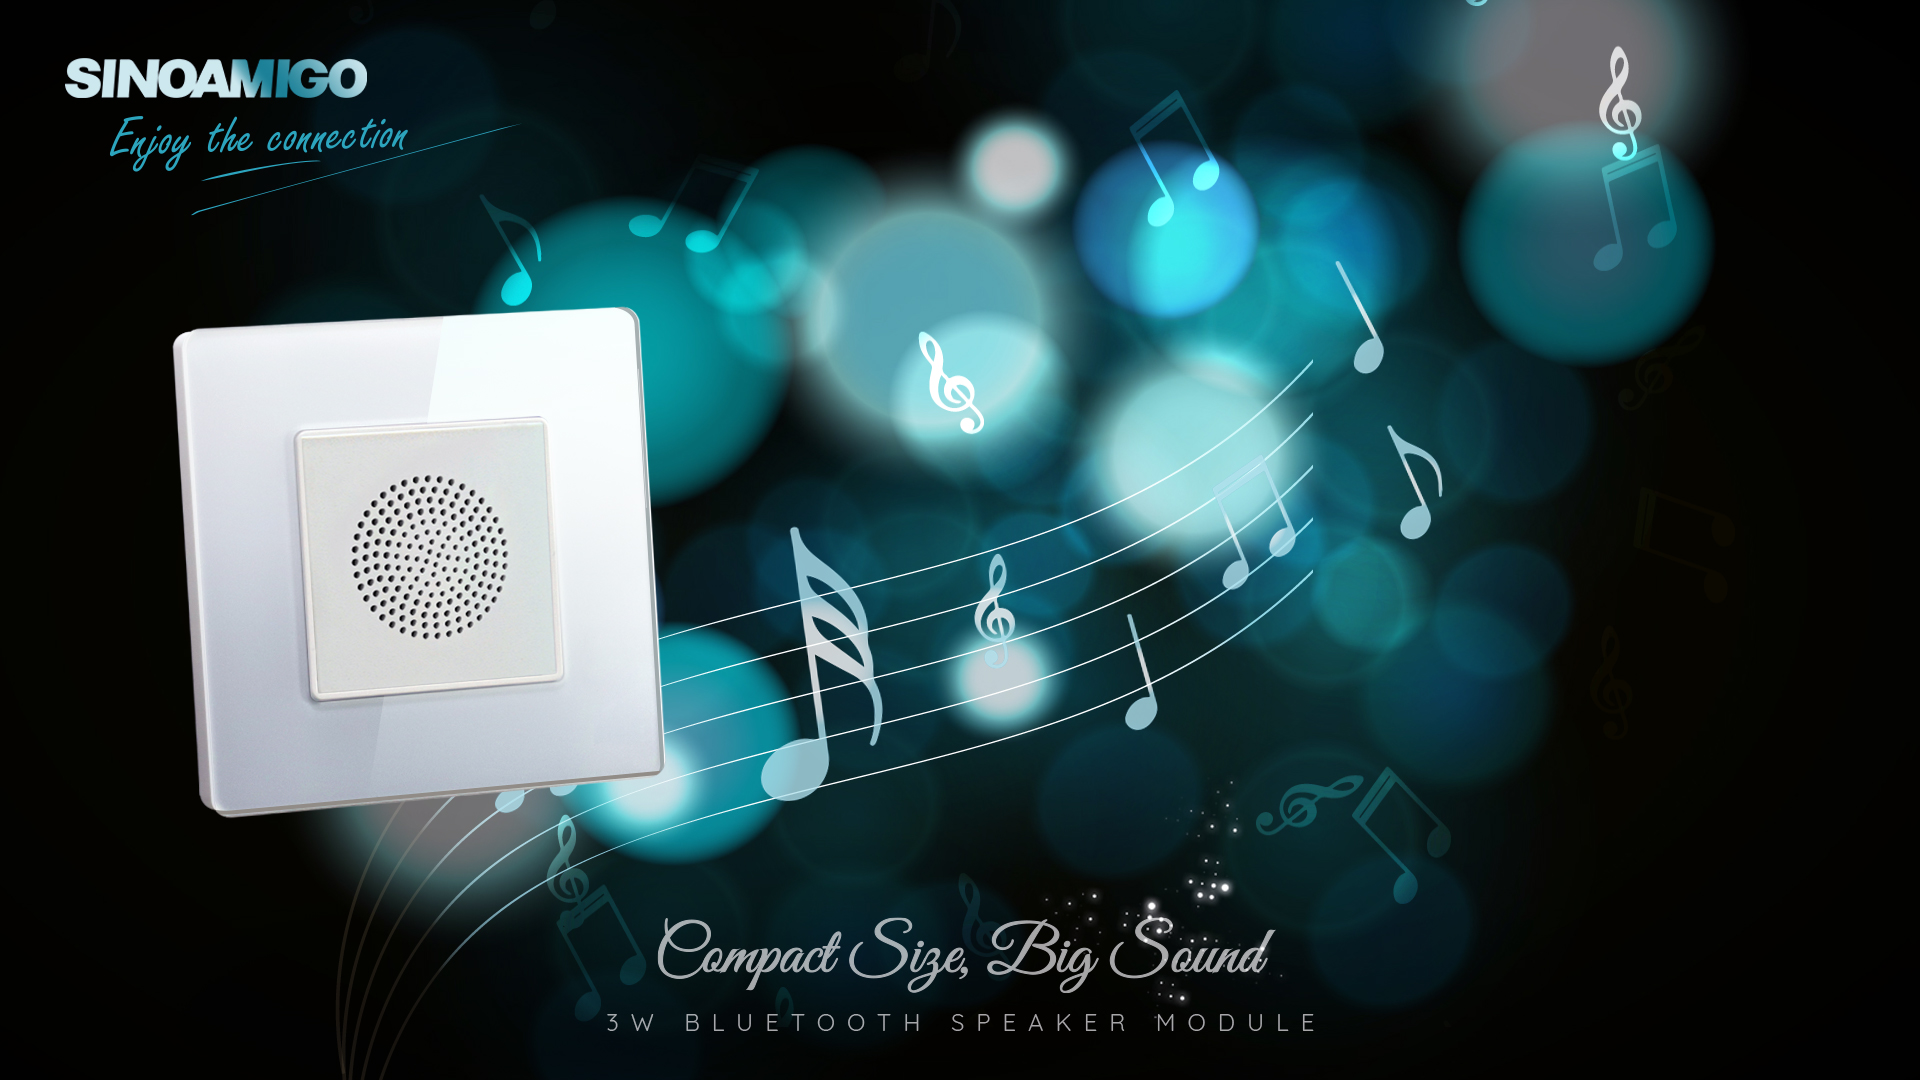 Compact Size, Big Sound: Introducing F41 Bluetooth speaker module